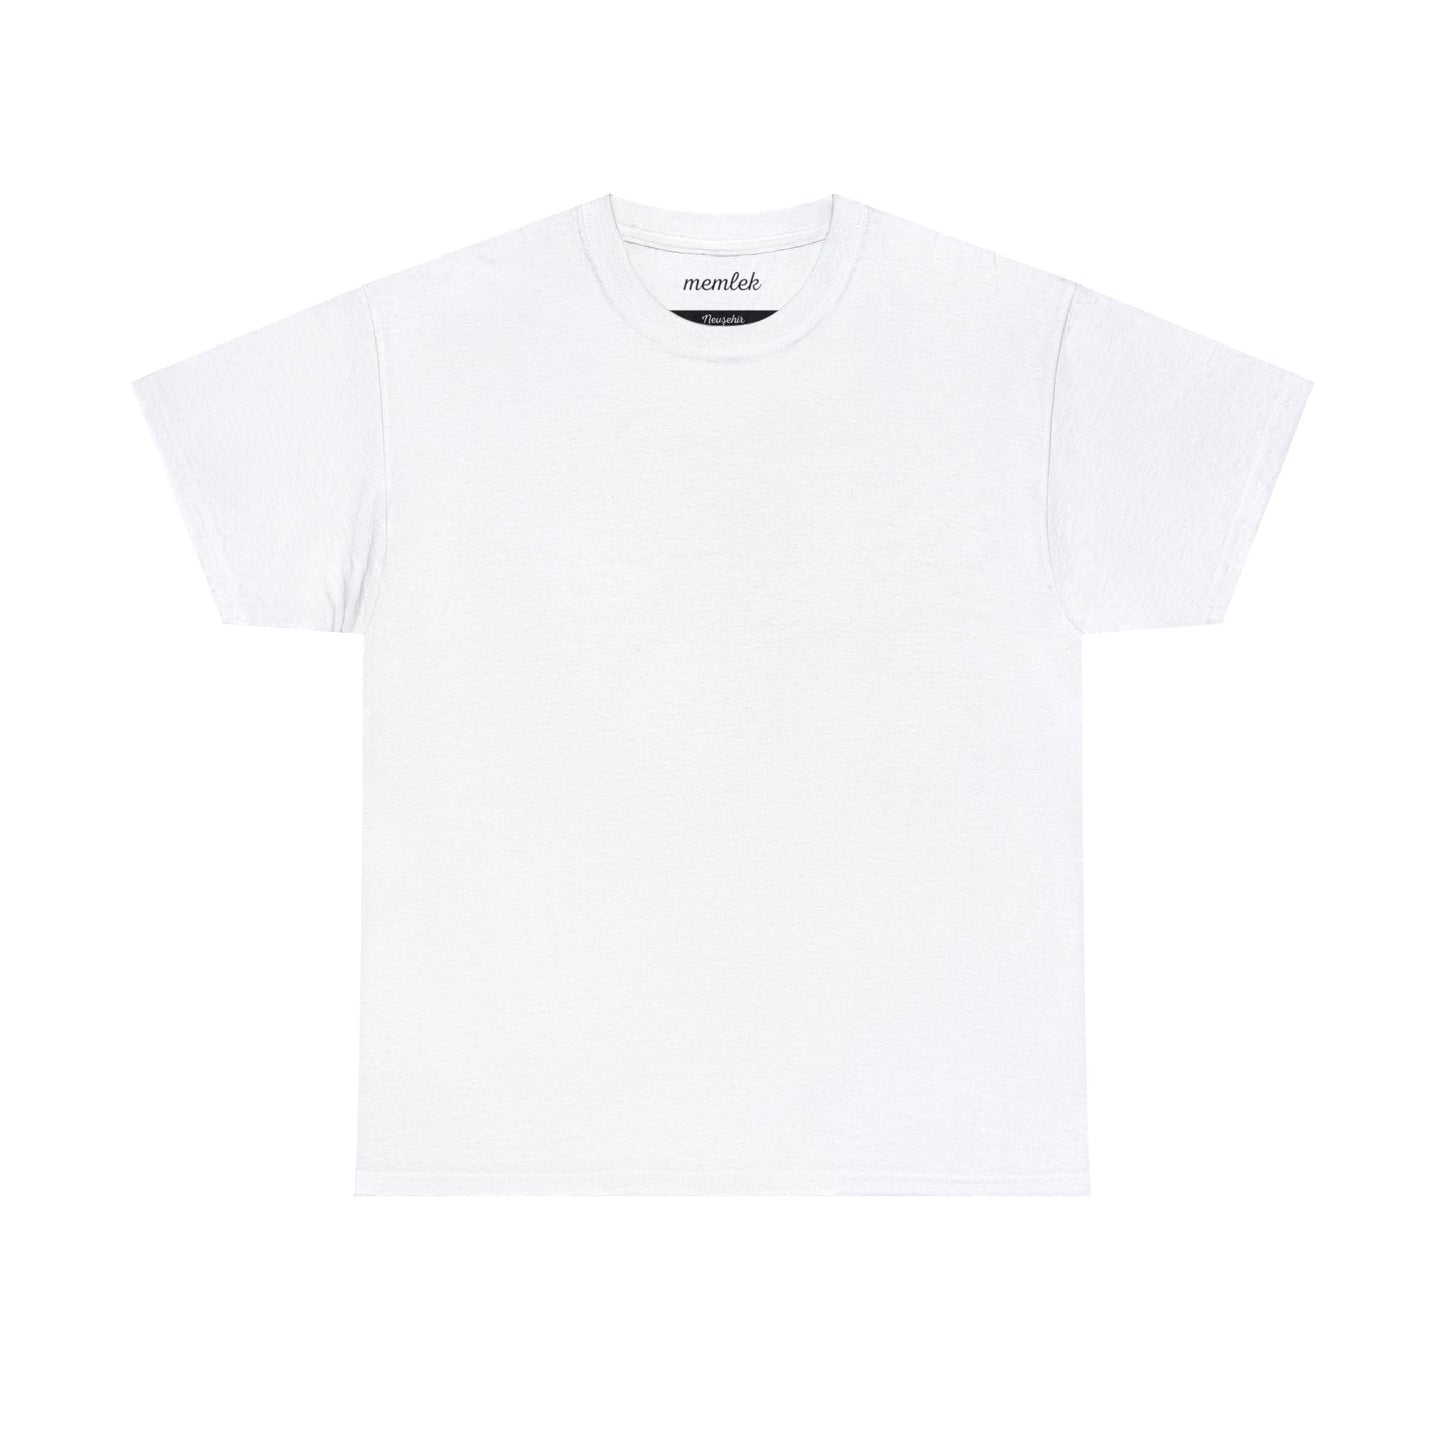 Kurt - 50 Nevşehir - T-Shirt - Back Print - Black/White